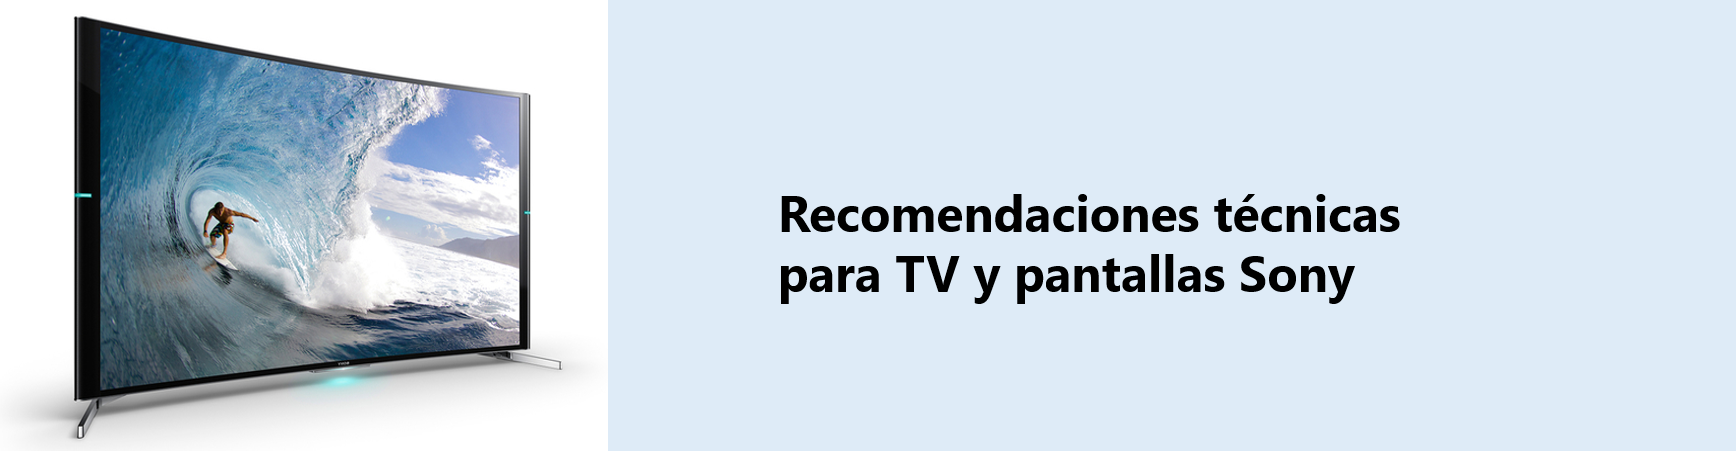 recomendaciones tv